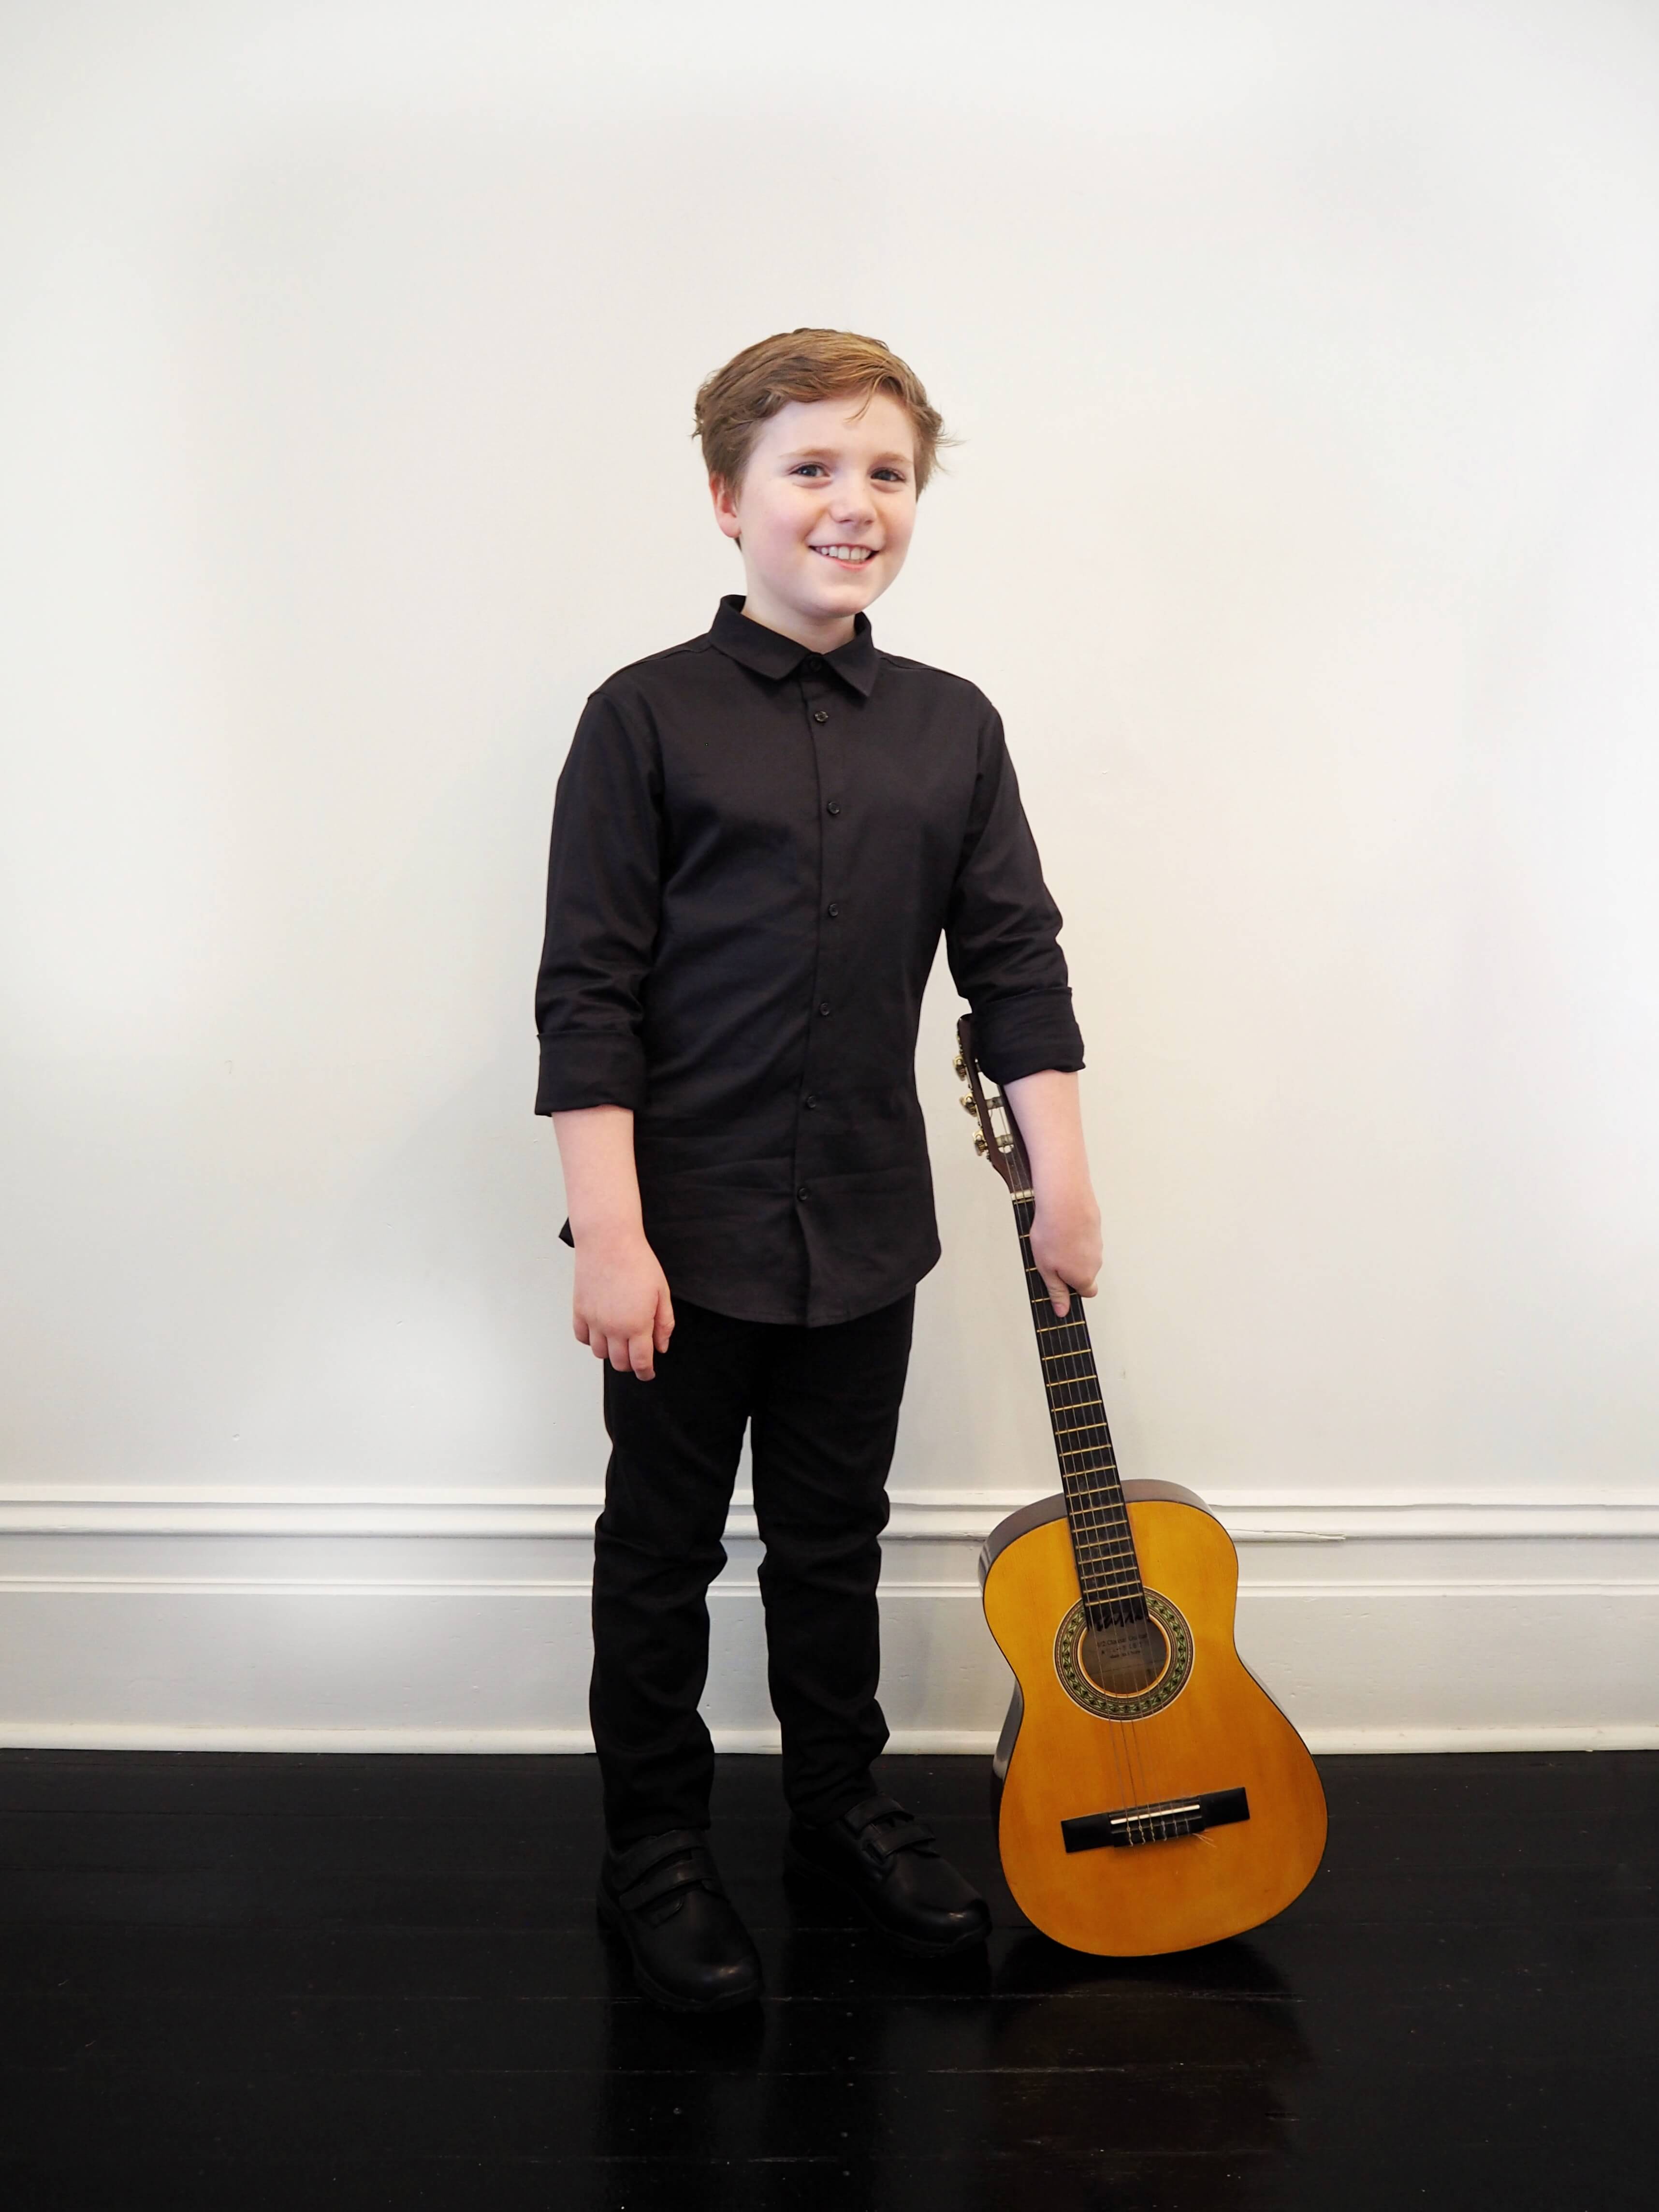 boy posing with guitar wearing black buttoned shirt